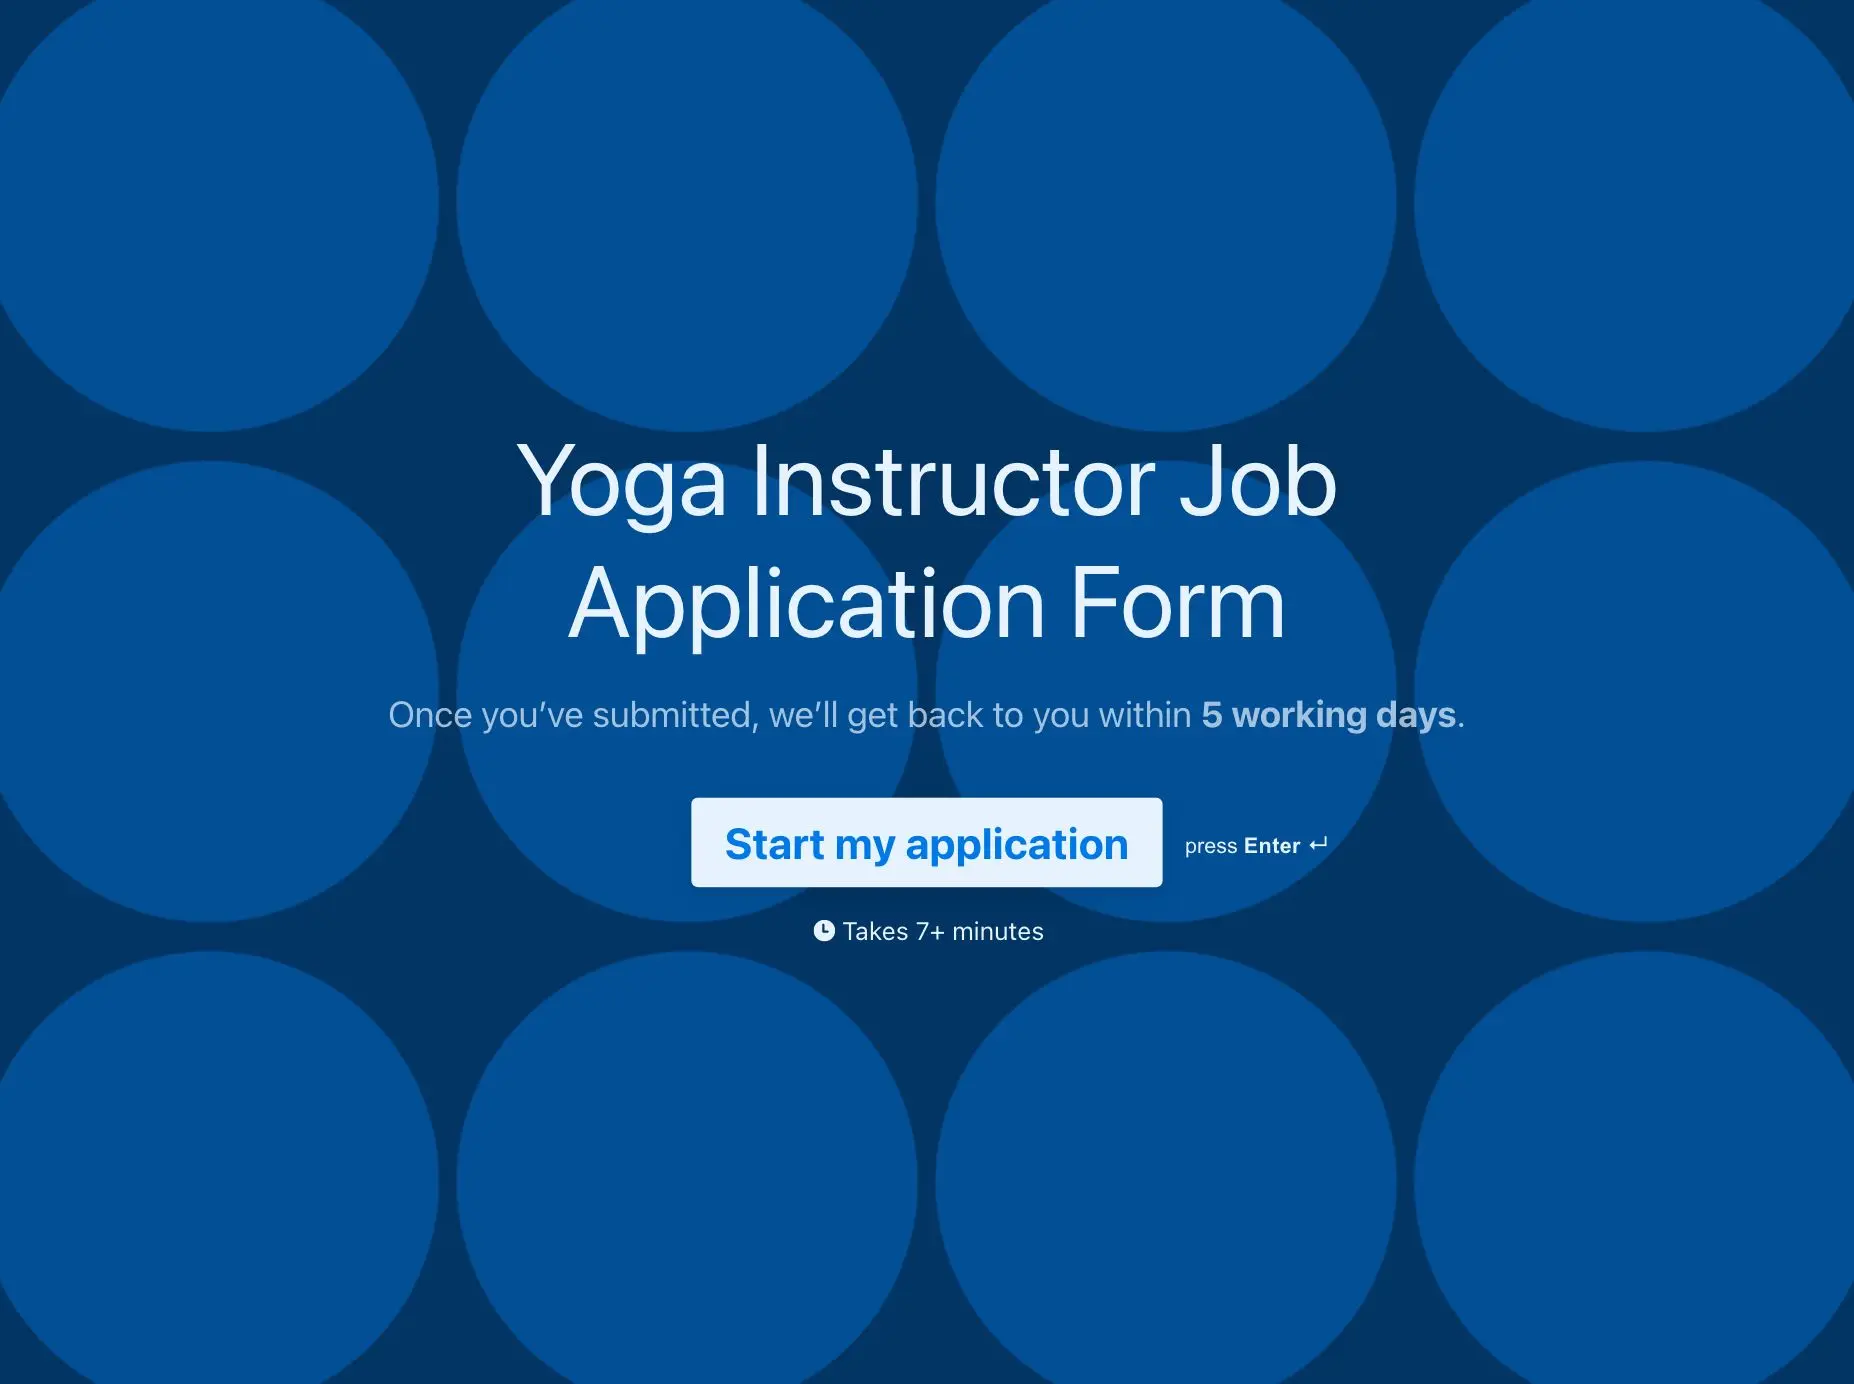 Yoga Instructor Job Application Form Template Hero